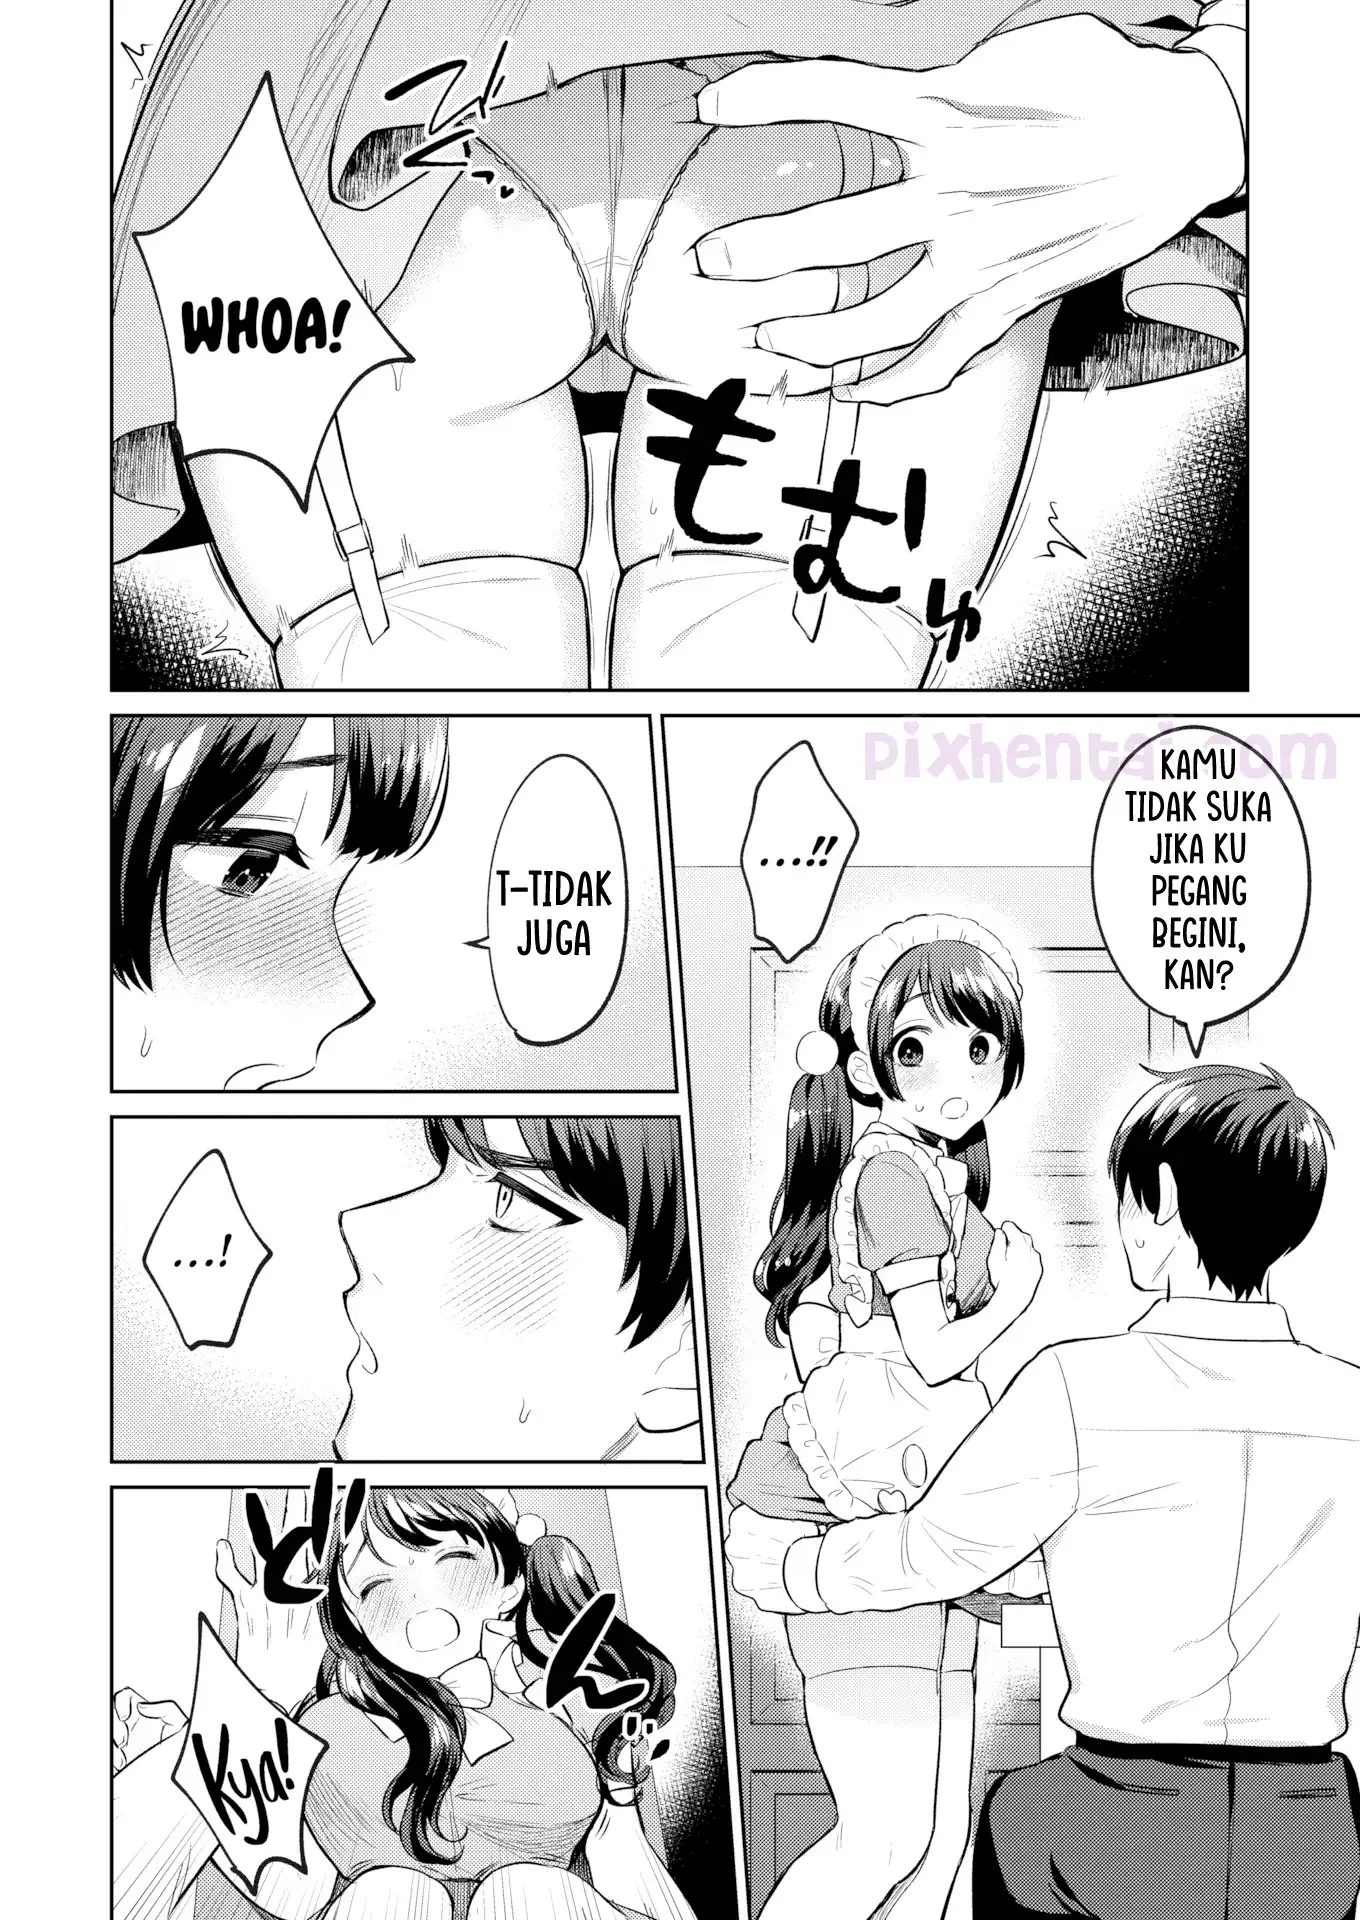 Komik hentai xxx manga sex bokep Careful of Maid Cafes Where Touching is OK 7